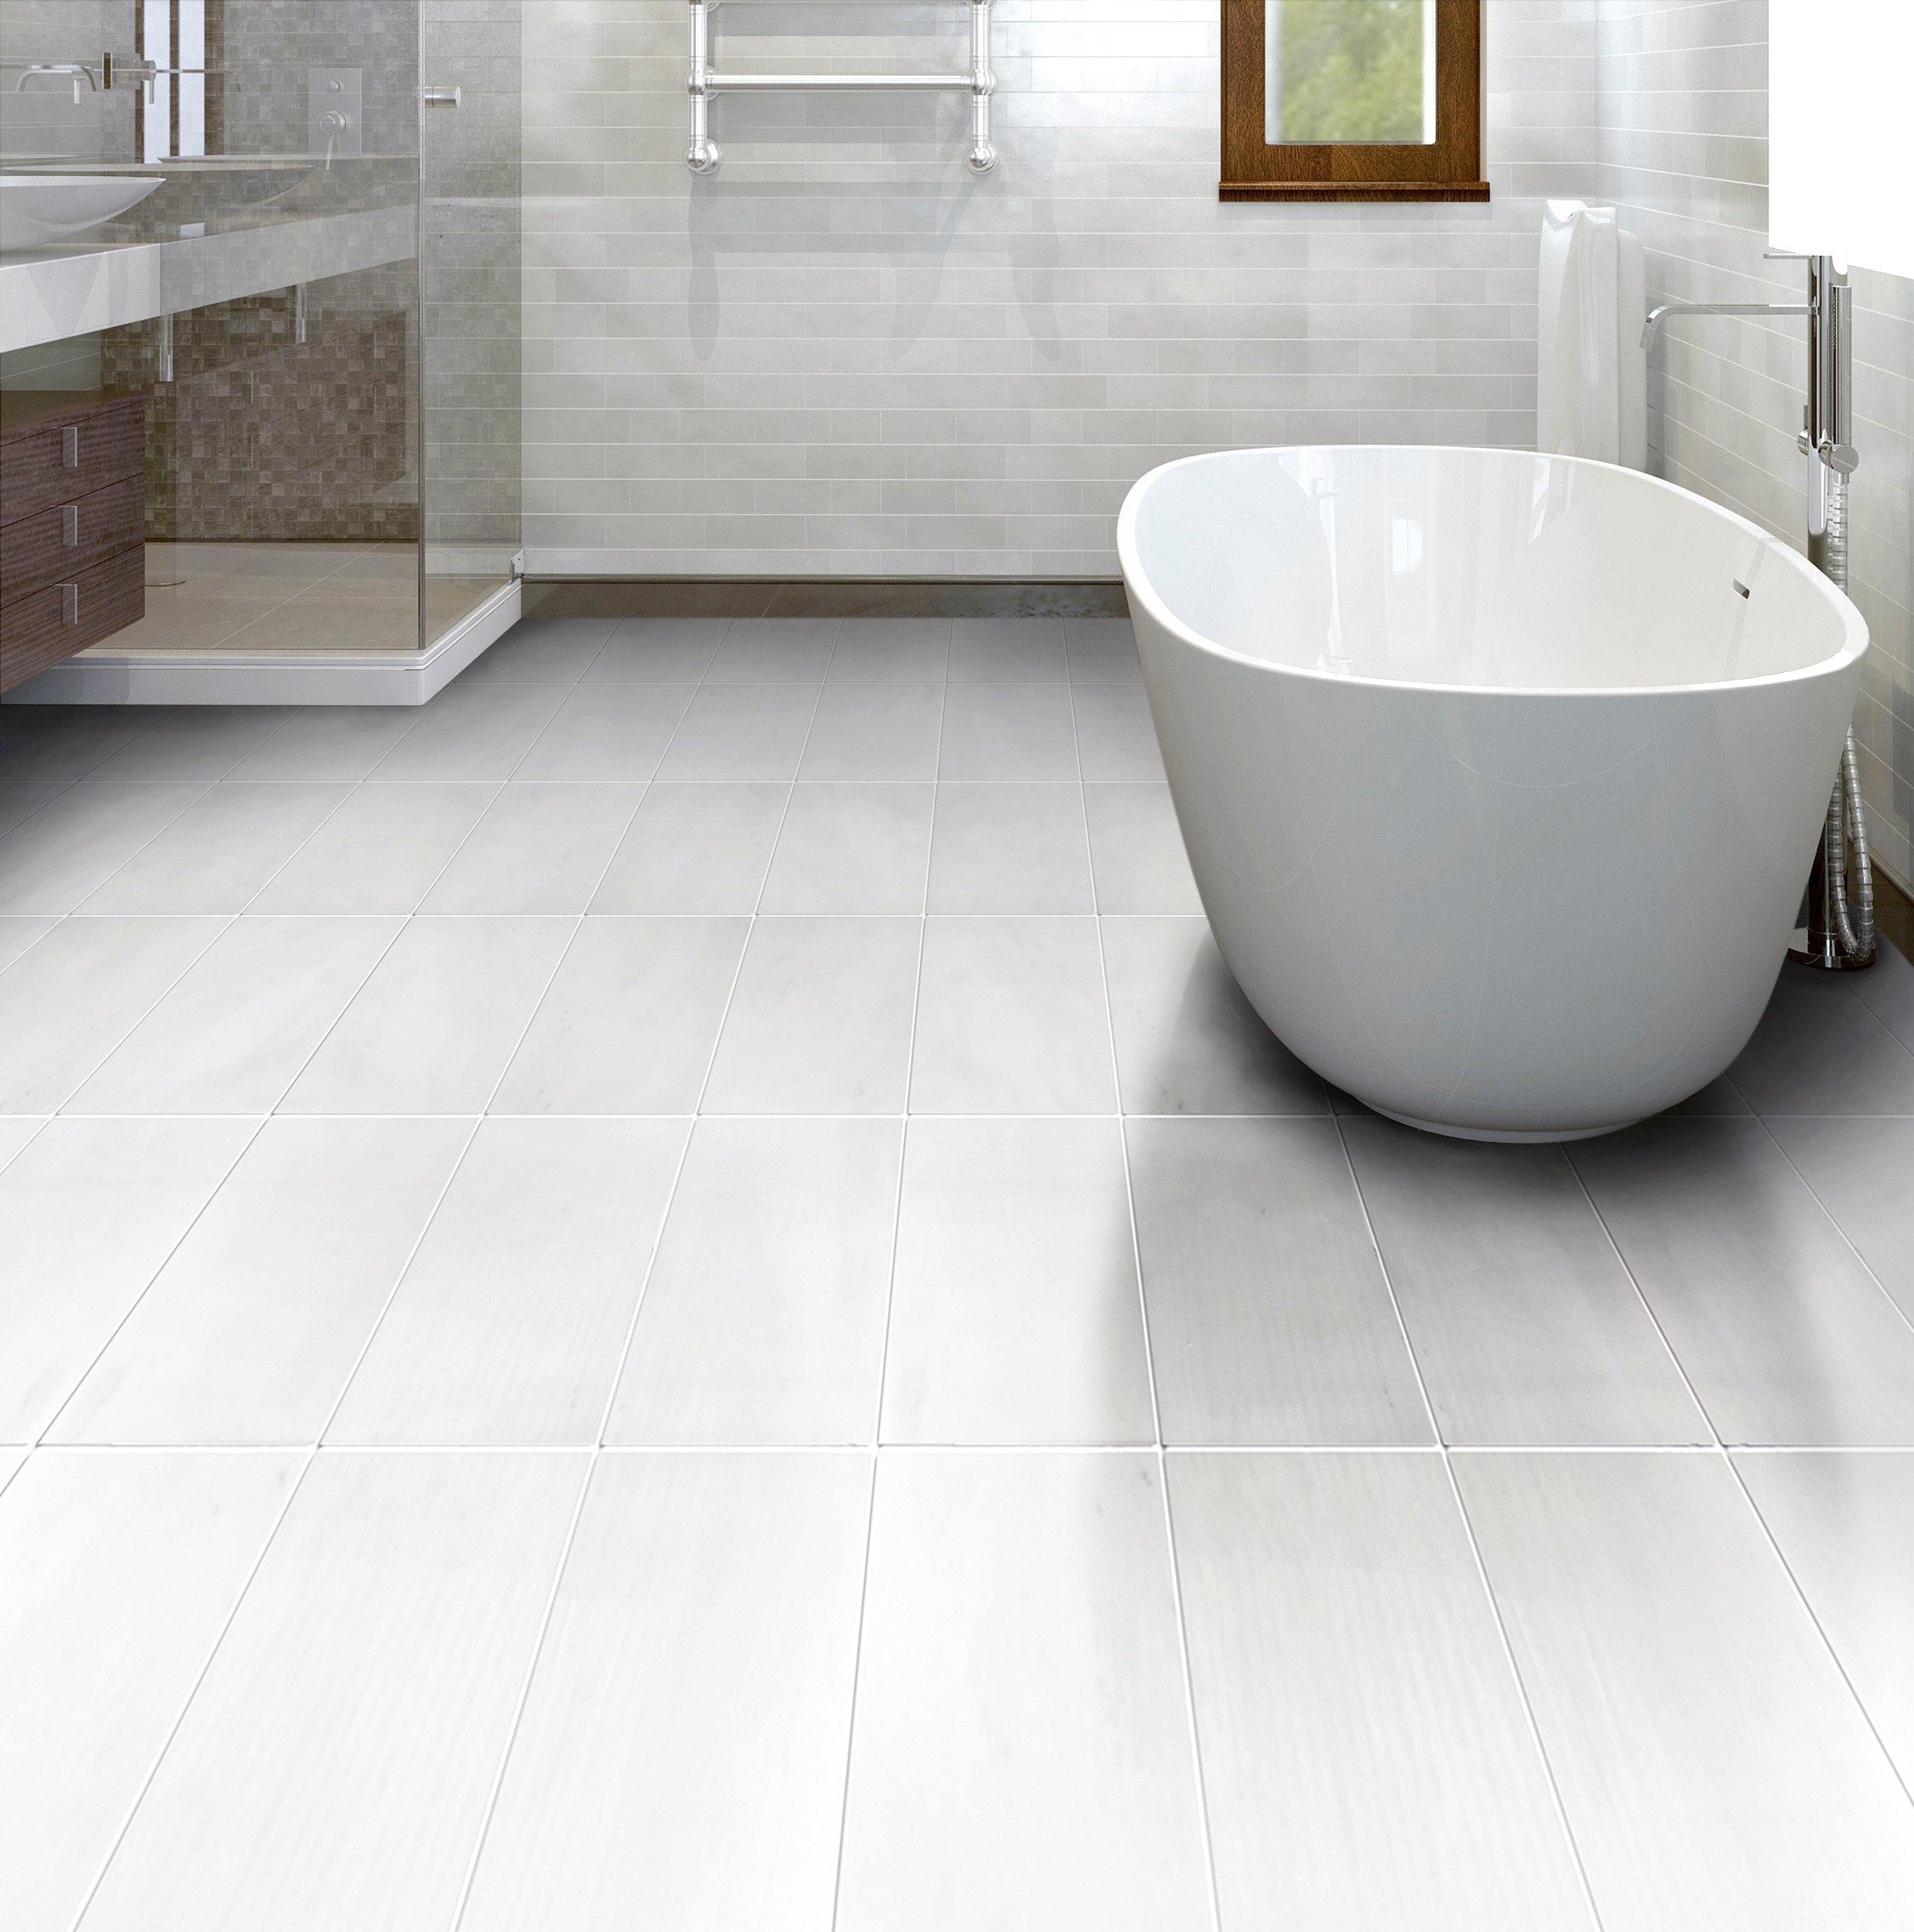 Incredible Master Bathroom With Carrara Marble Tile Surround